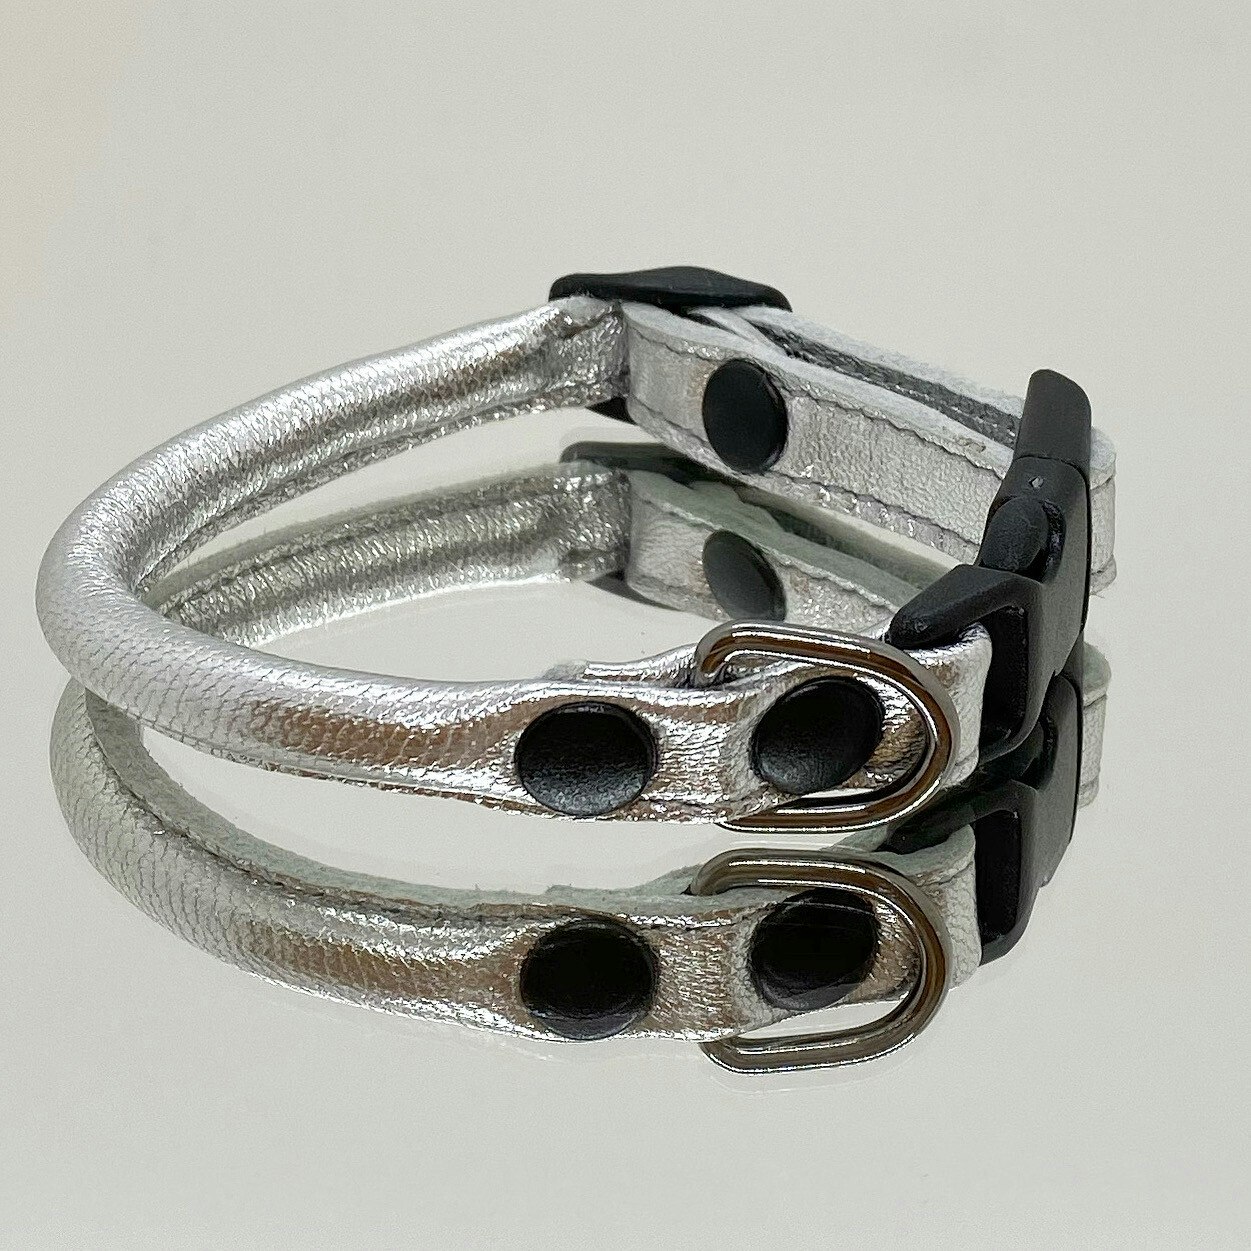 Del Mar Round Stitched Leather Collar Metallic Silver